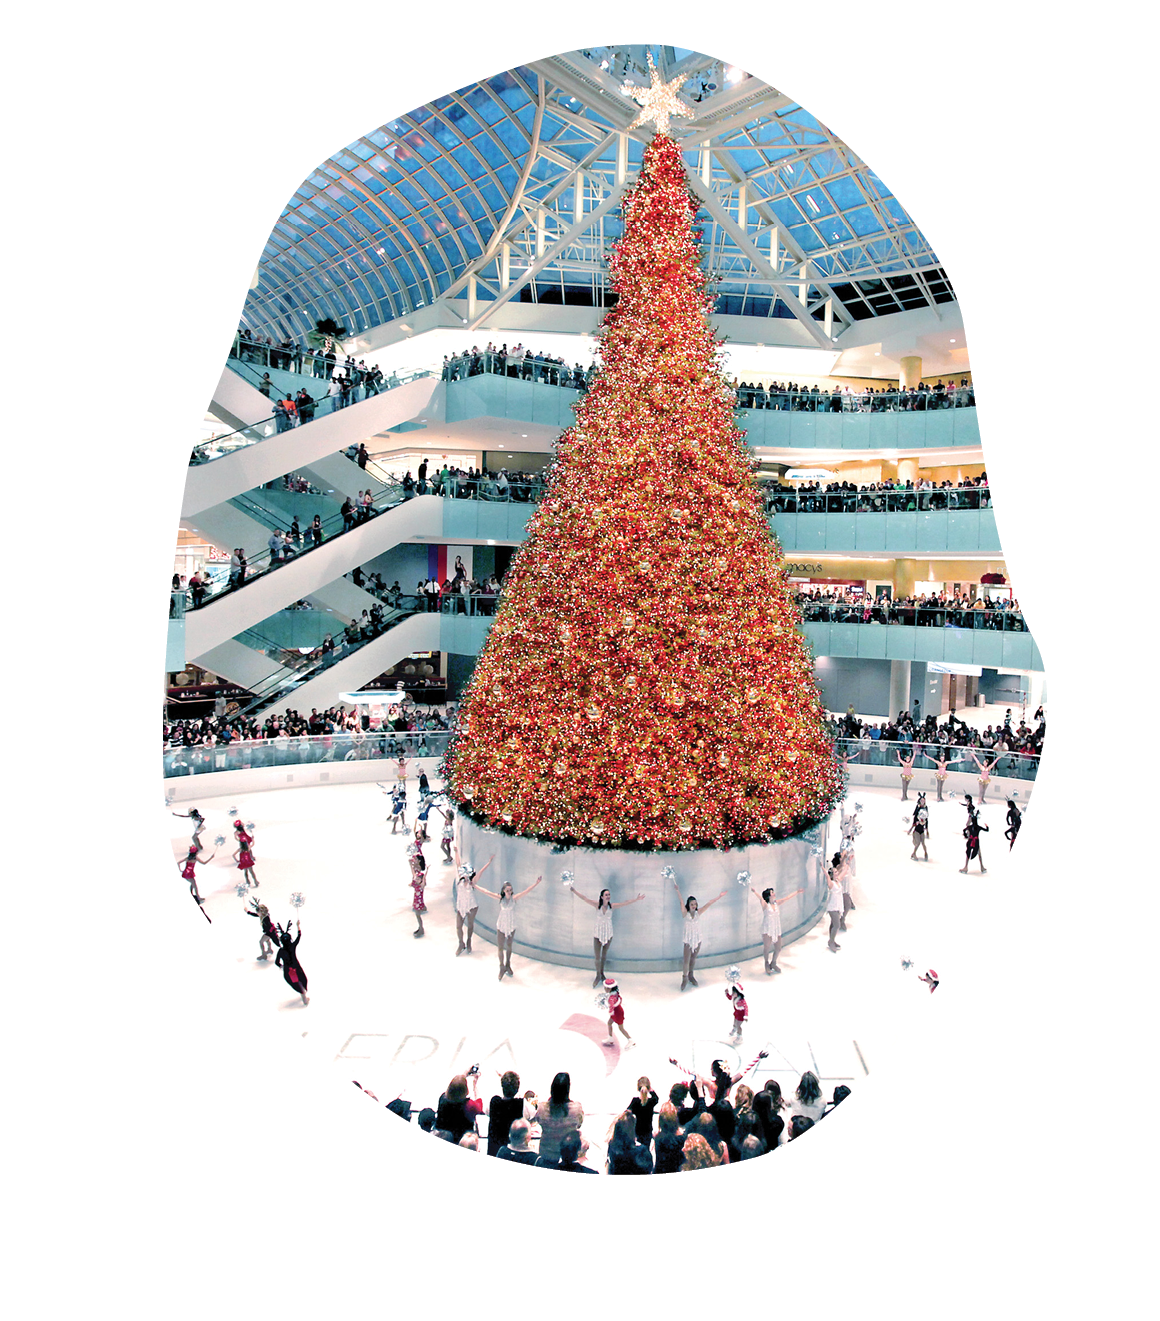 North Dallas Galleria Shopping Mall at Christmas Time Editorial Stock Image  - Image of galleria, dallas: 206153099